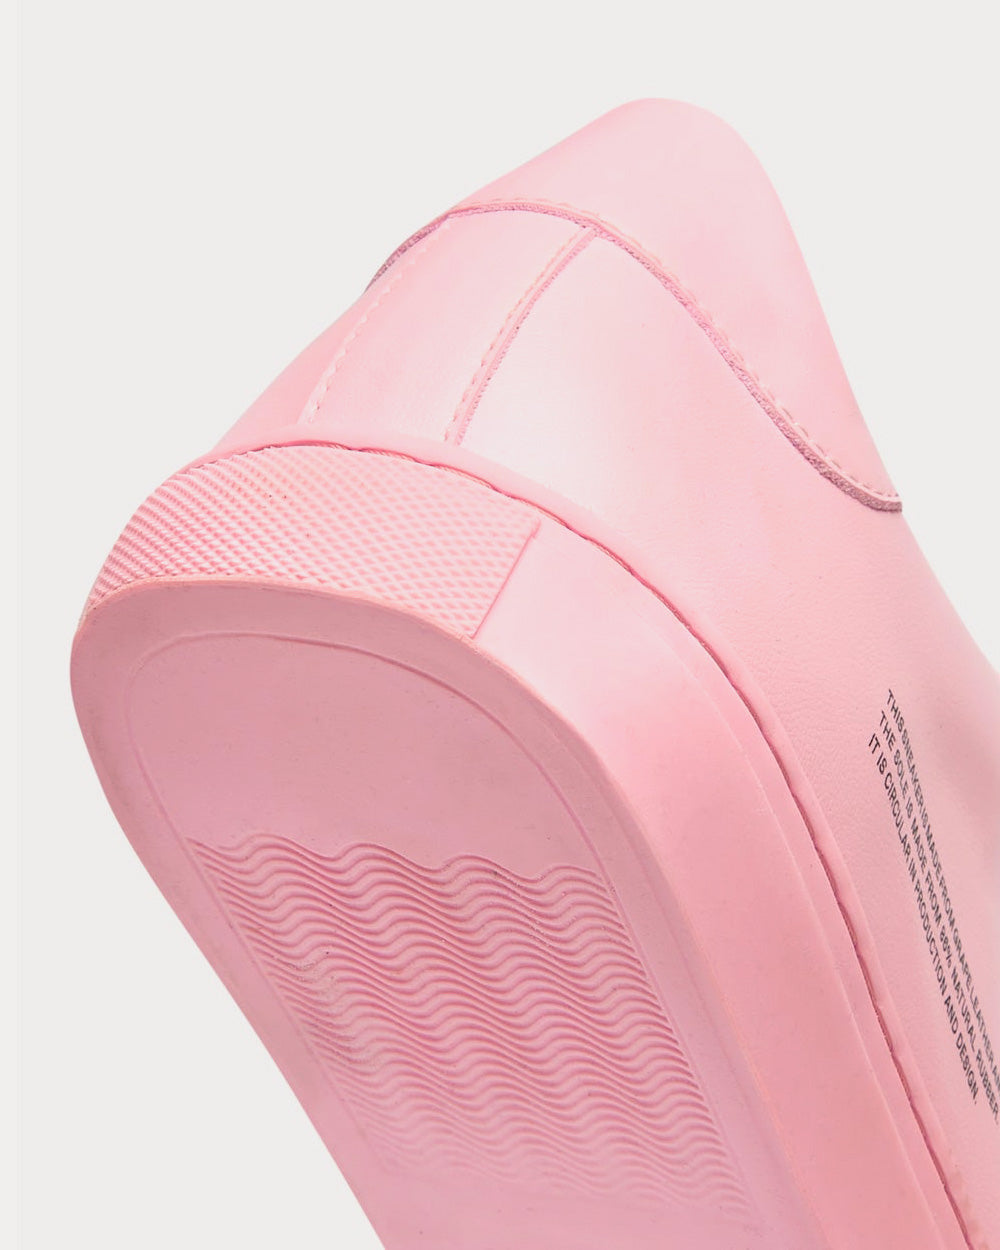 Pangaia - Grape Leather Sakura Pink Low Top Sneakers